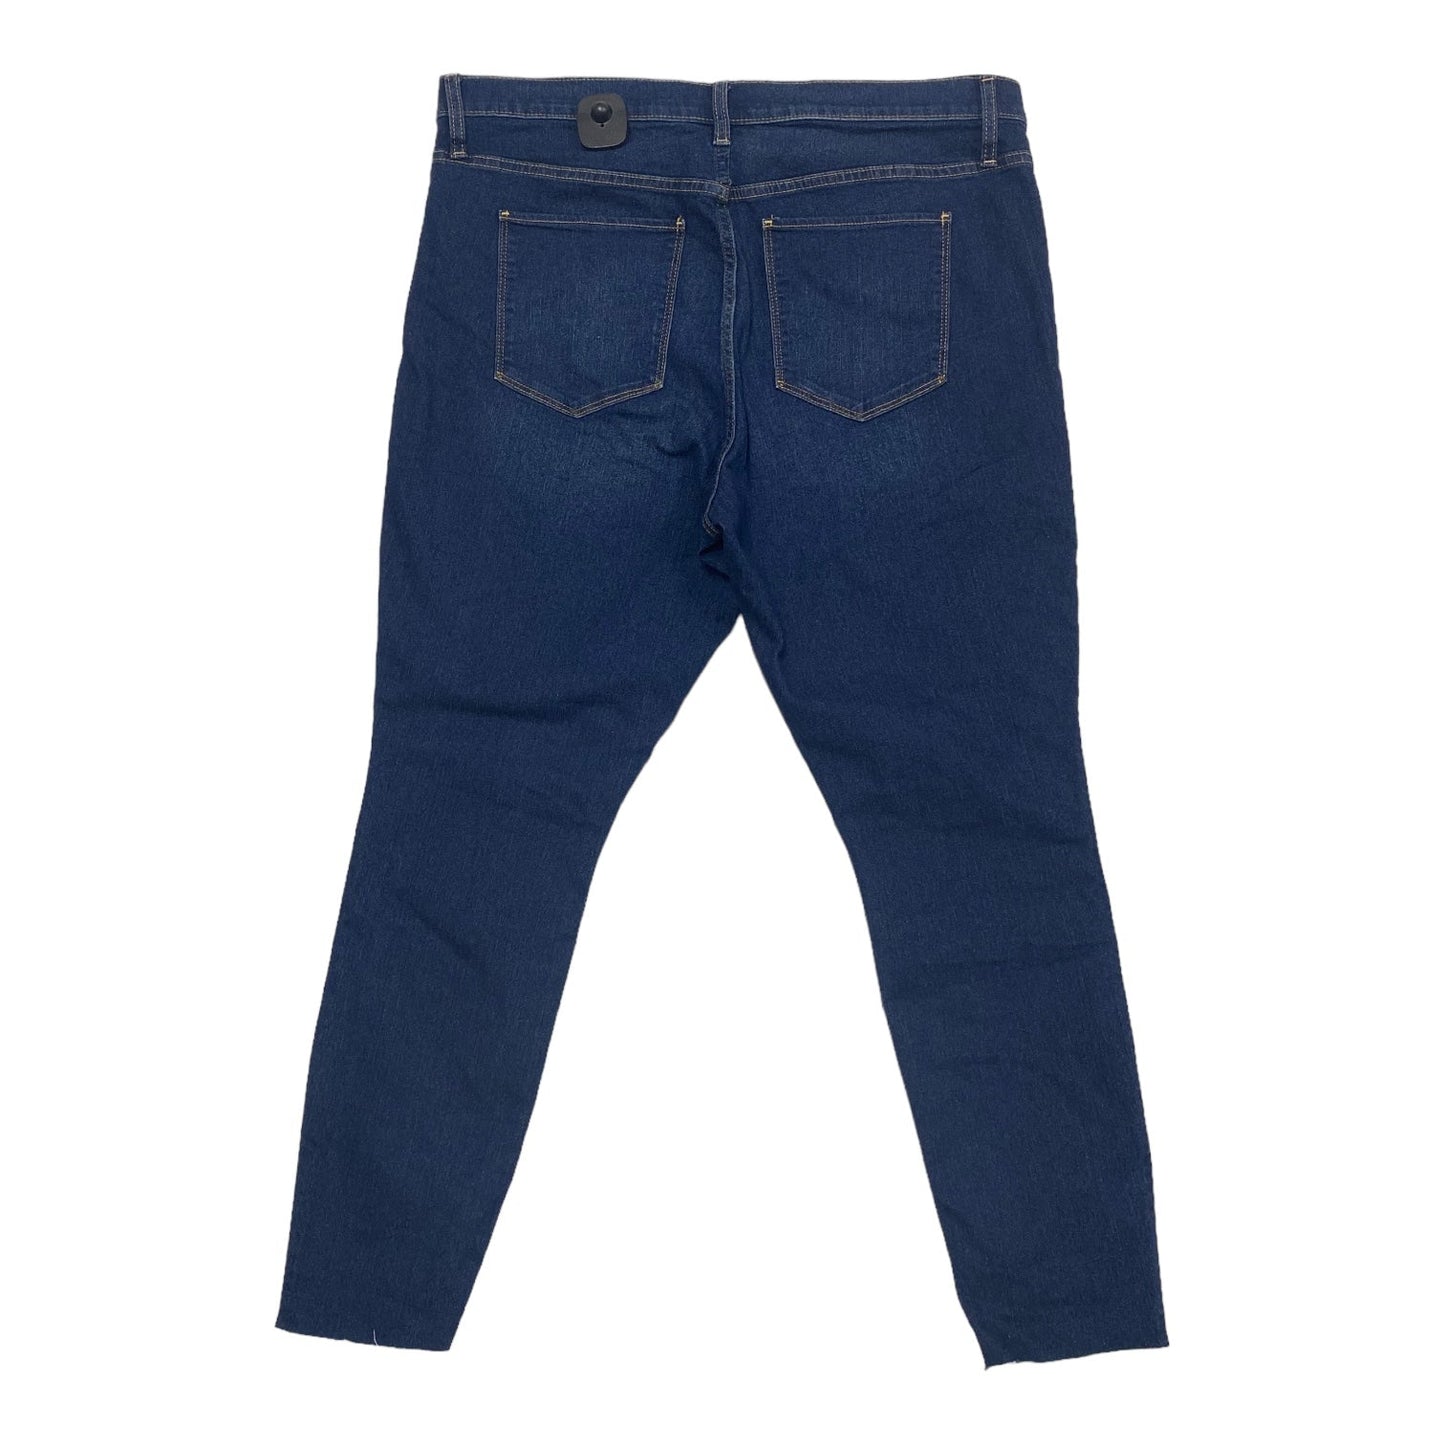 Blue Denim Jeans Jeggings Gap, Size 18